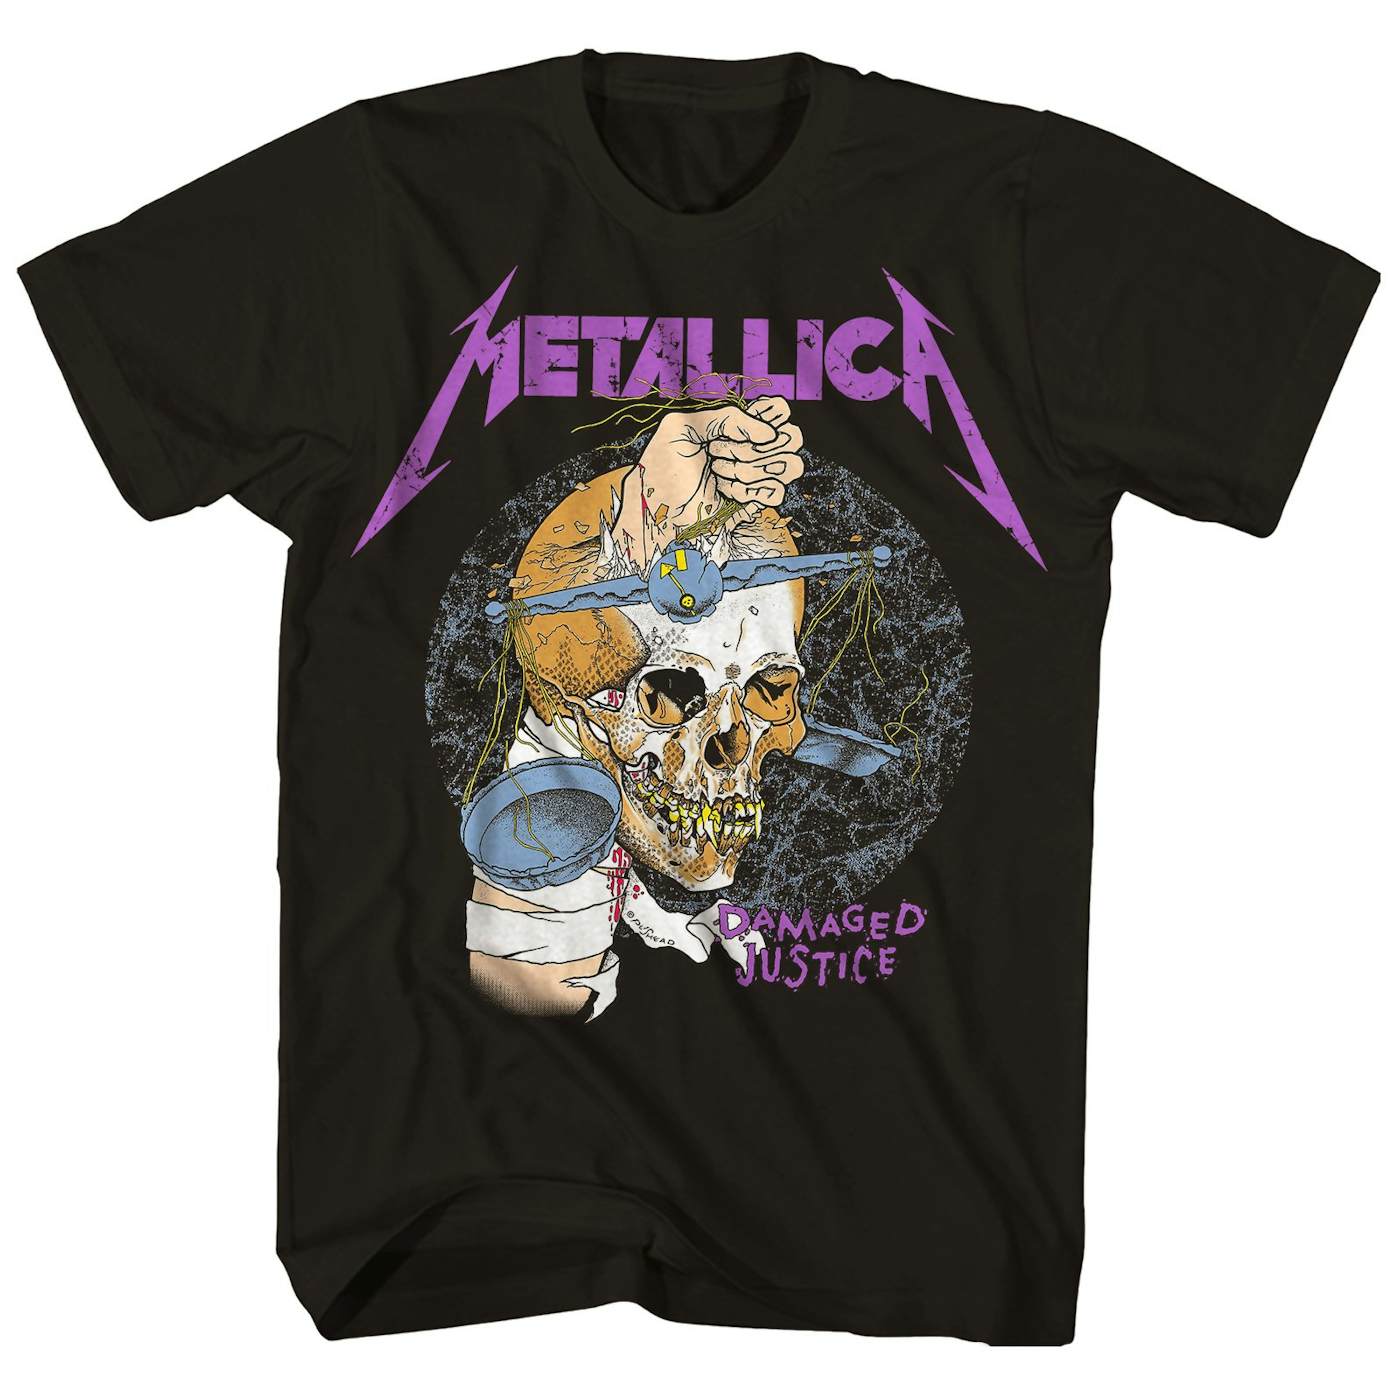 Metallica T-Shirt | Damaged Justice '88 Tour T-Shirt (Reissue)